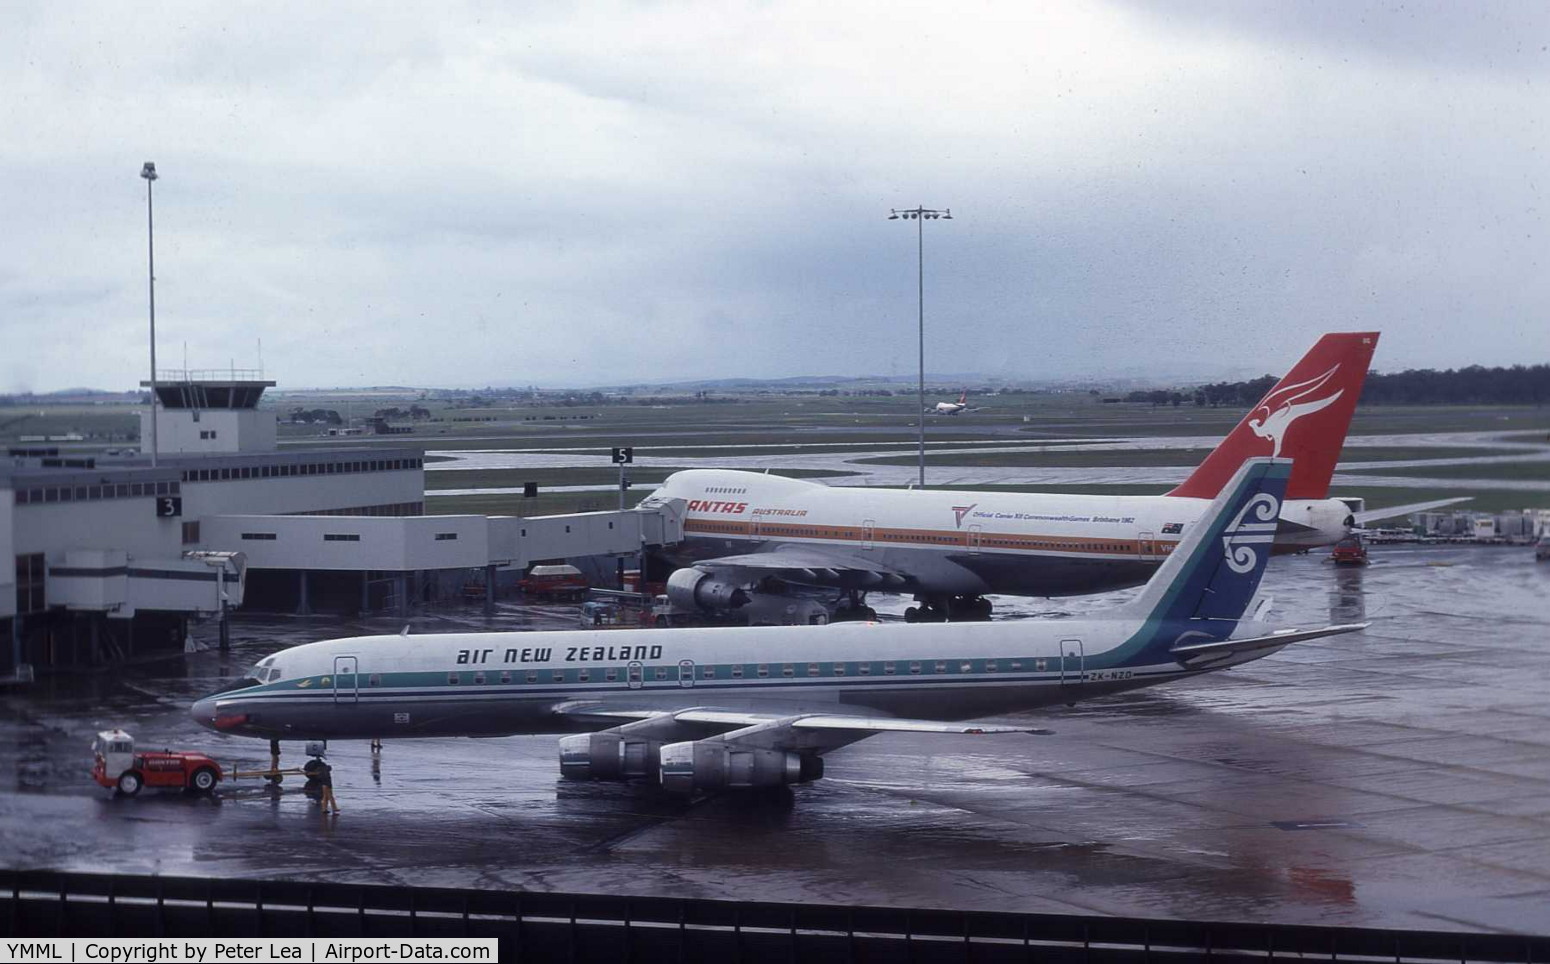 Melbourne International Airport, Tullamarine, Victoria Australia (YMML) - Tullamarine International Terminal in 1978. 